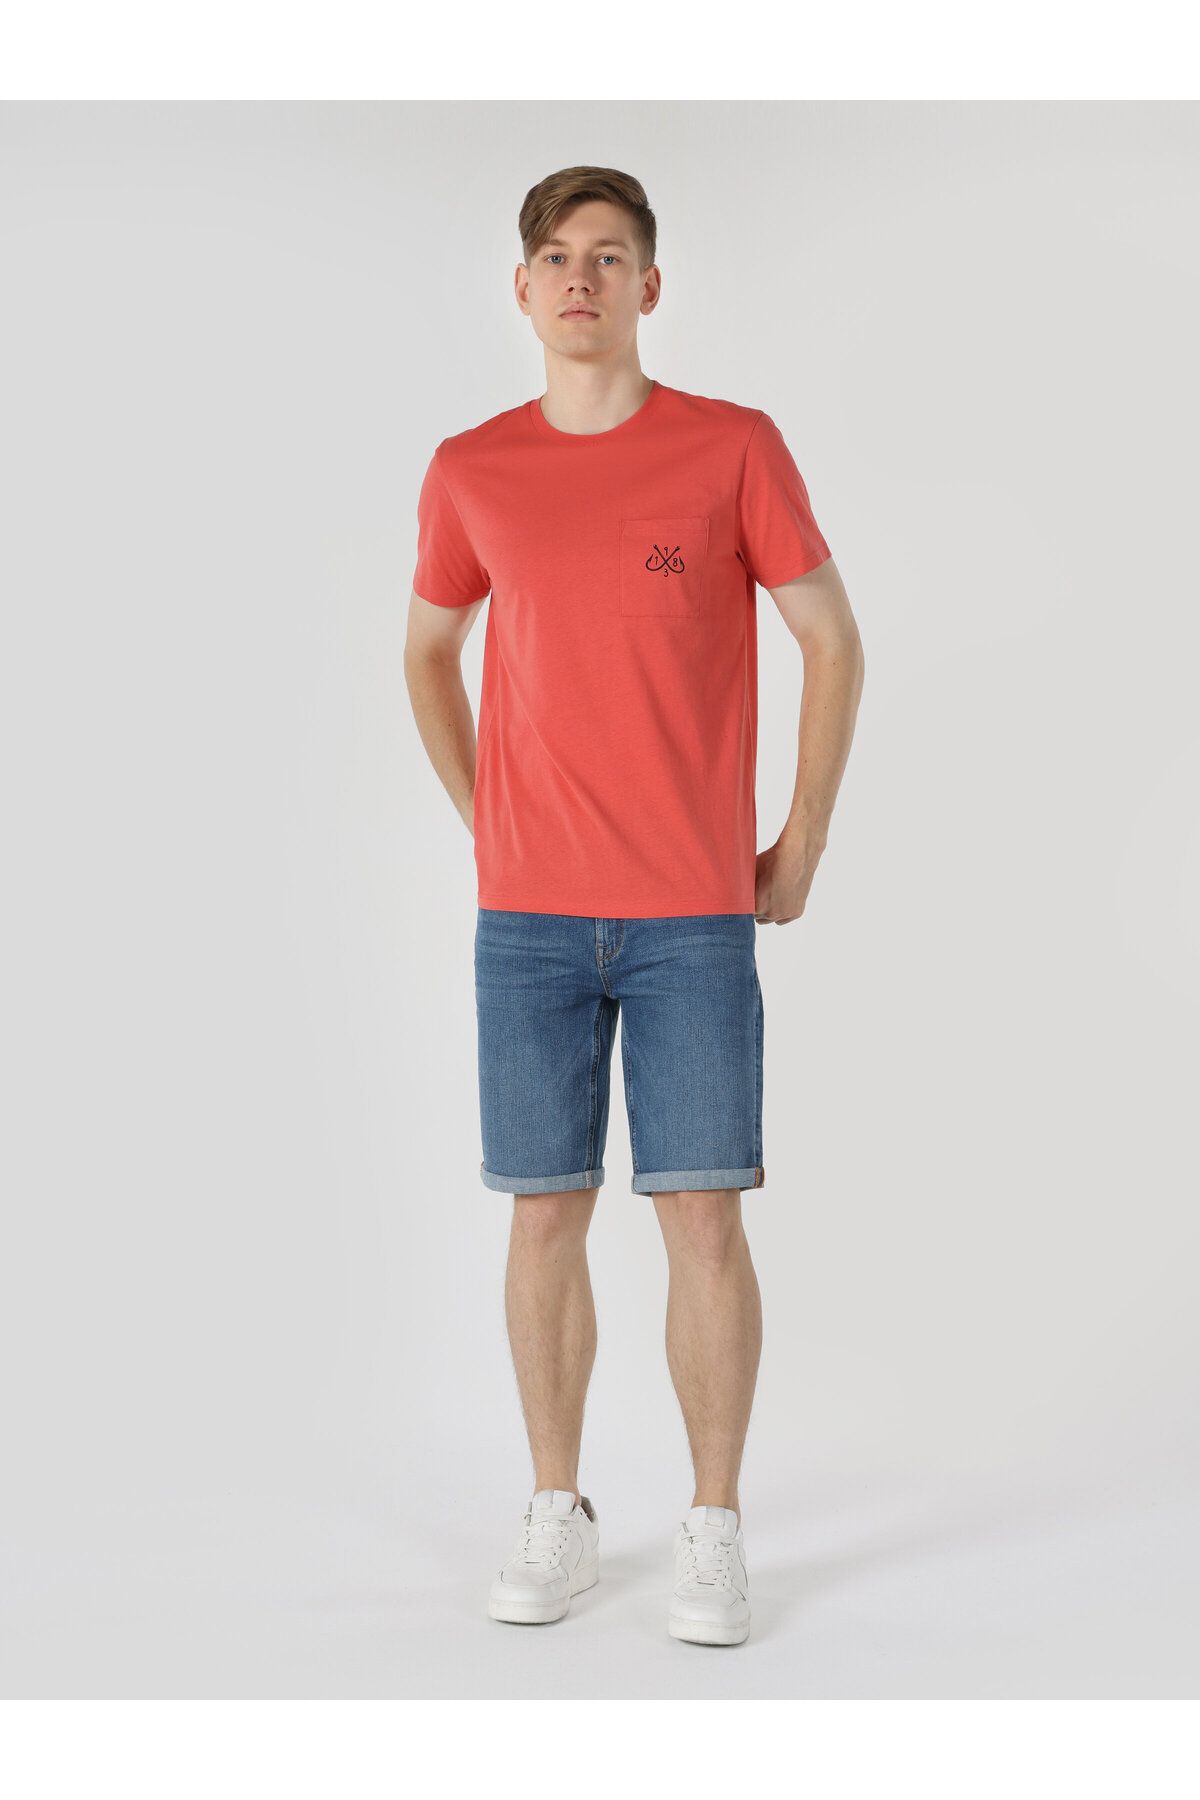 Colin’s یقه دوچرخه تناسب منظم چاپ شده آستین کوتاه مردان قرمز T shirt